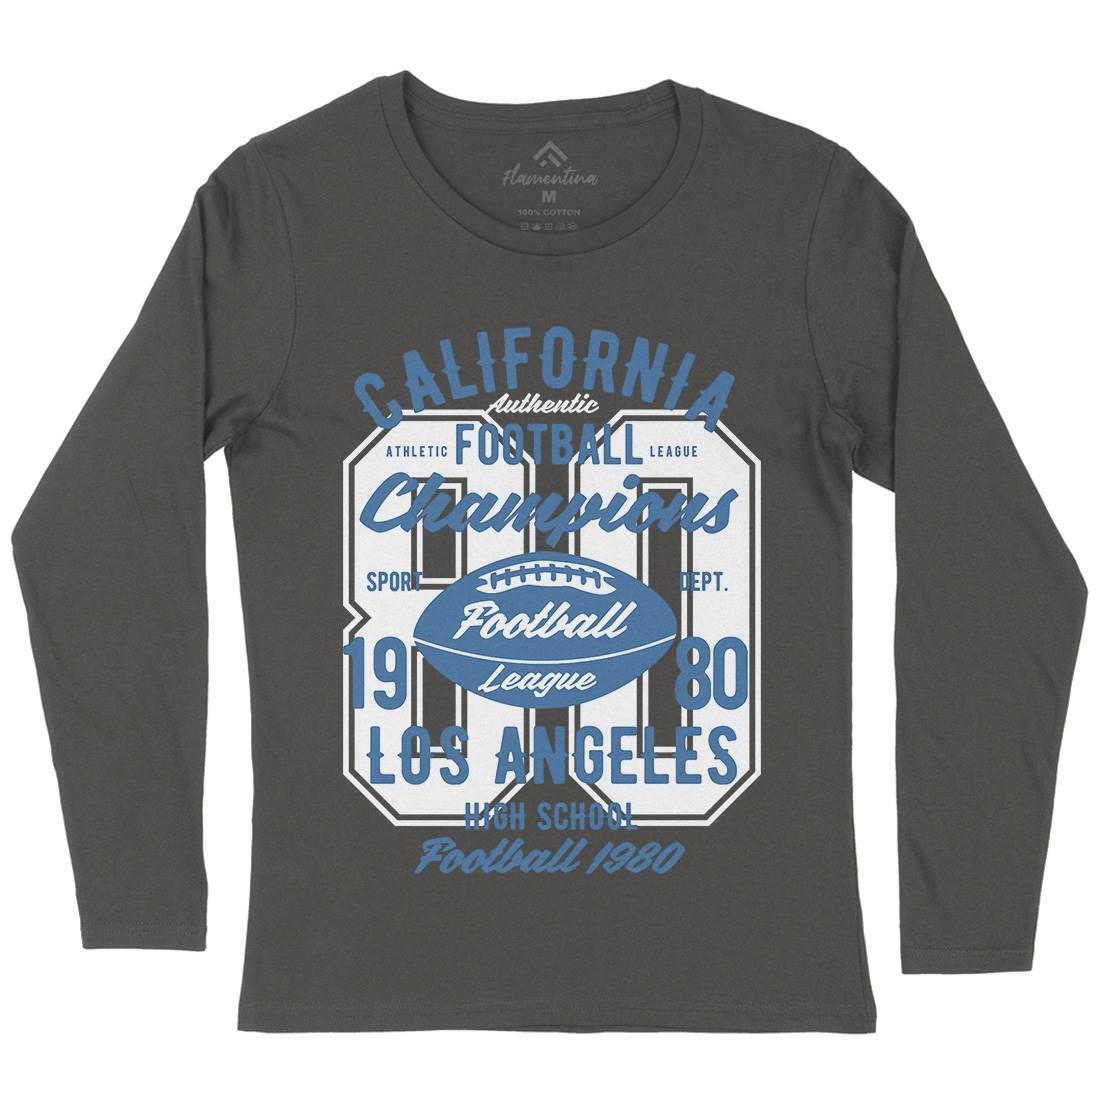 California Football League Womens Long Sleeve T-Shirt Sport B193